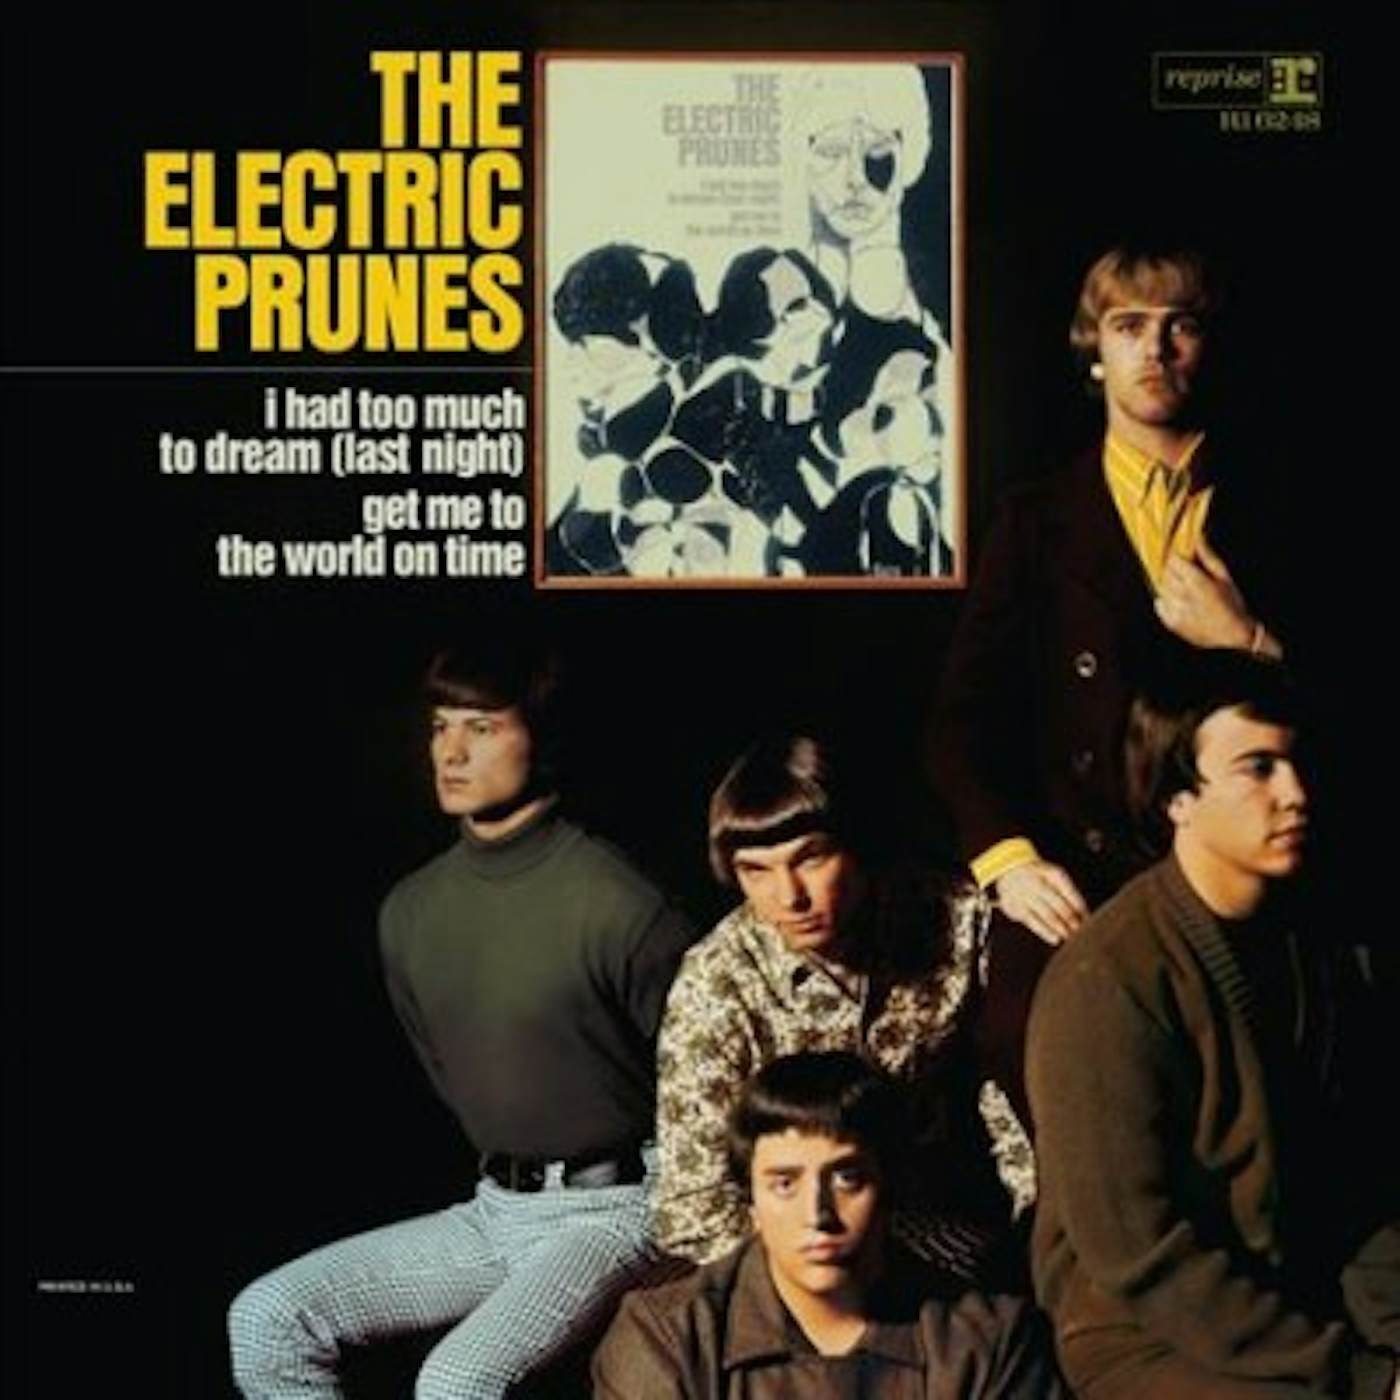 The Electric Prunes Vinyl Record